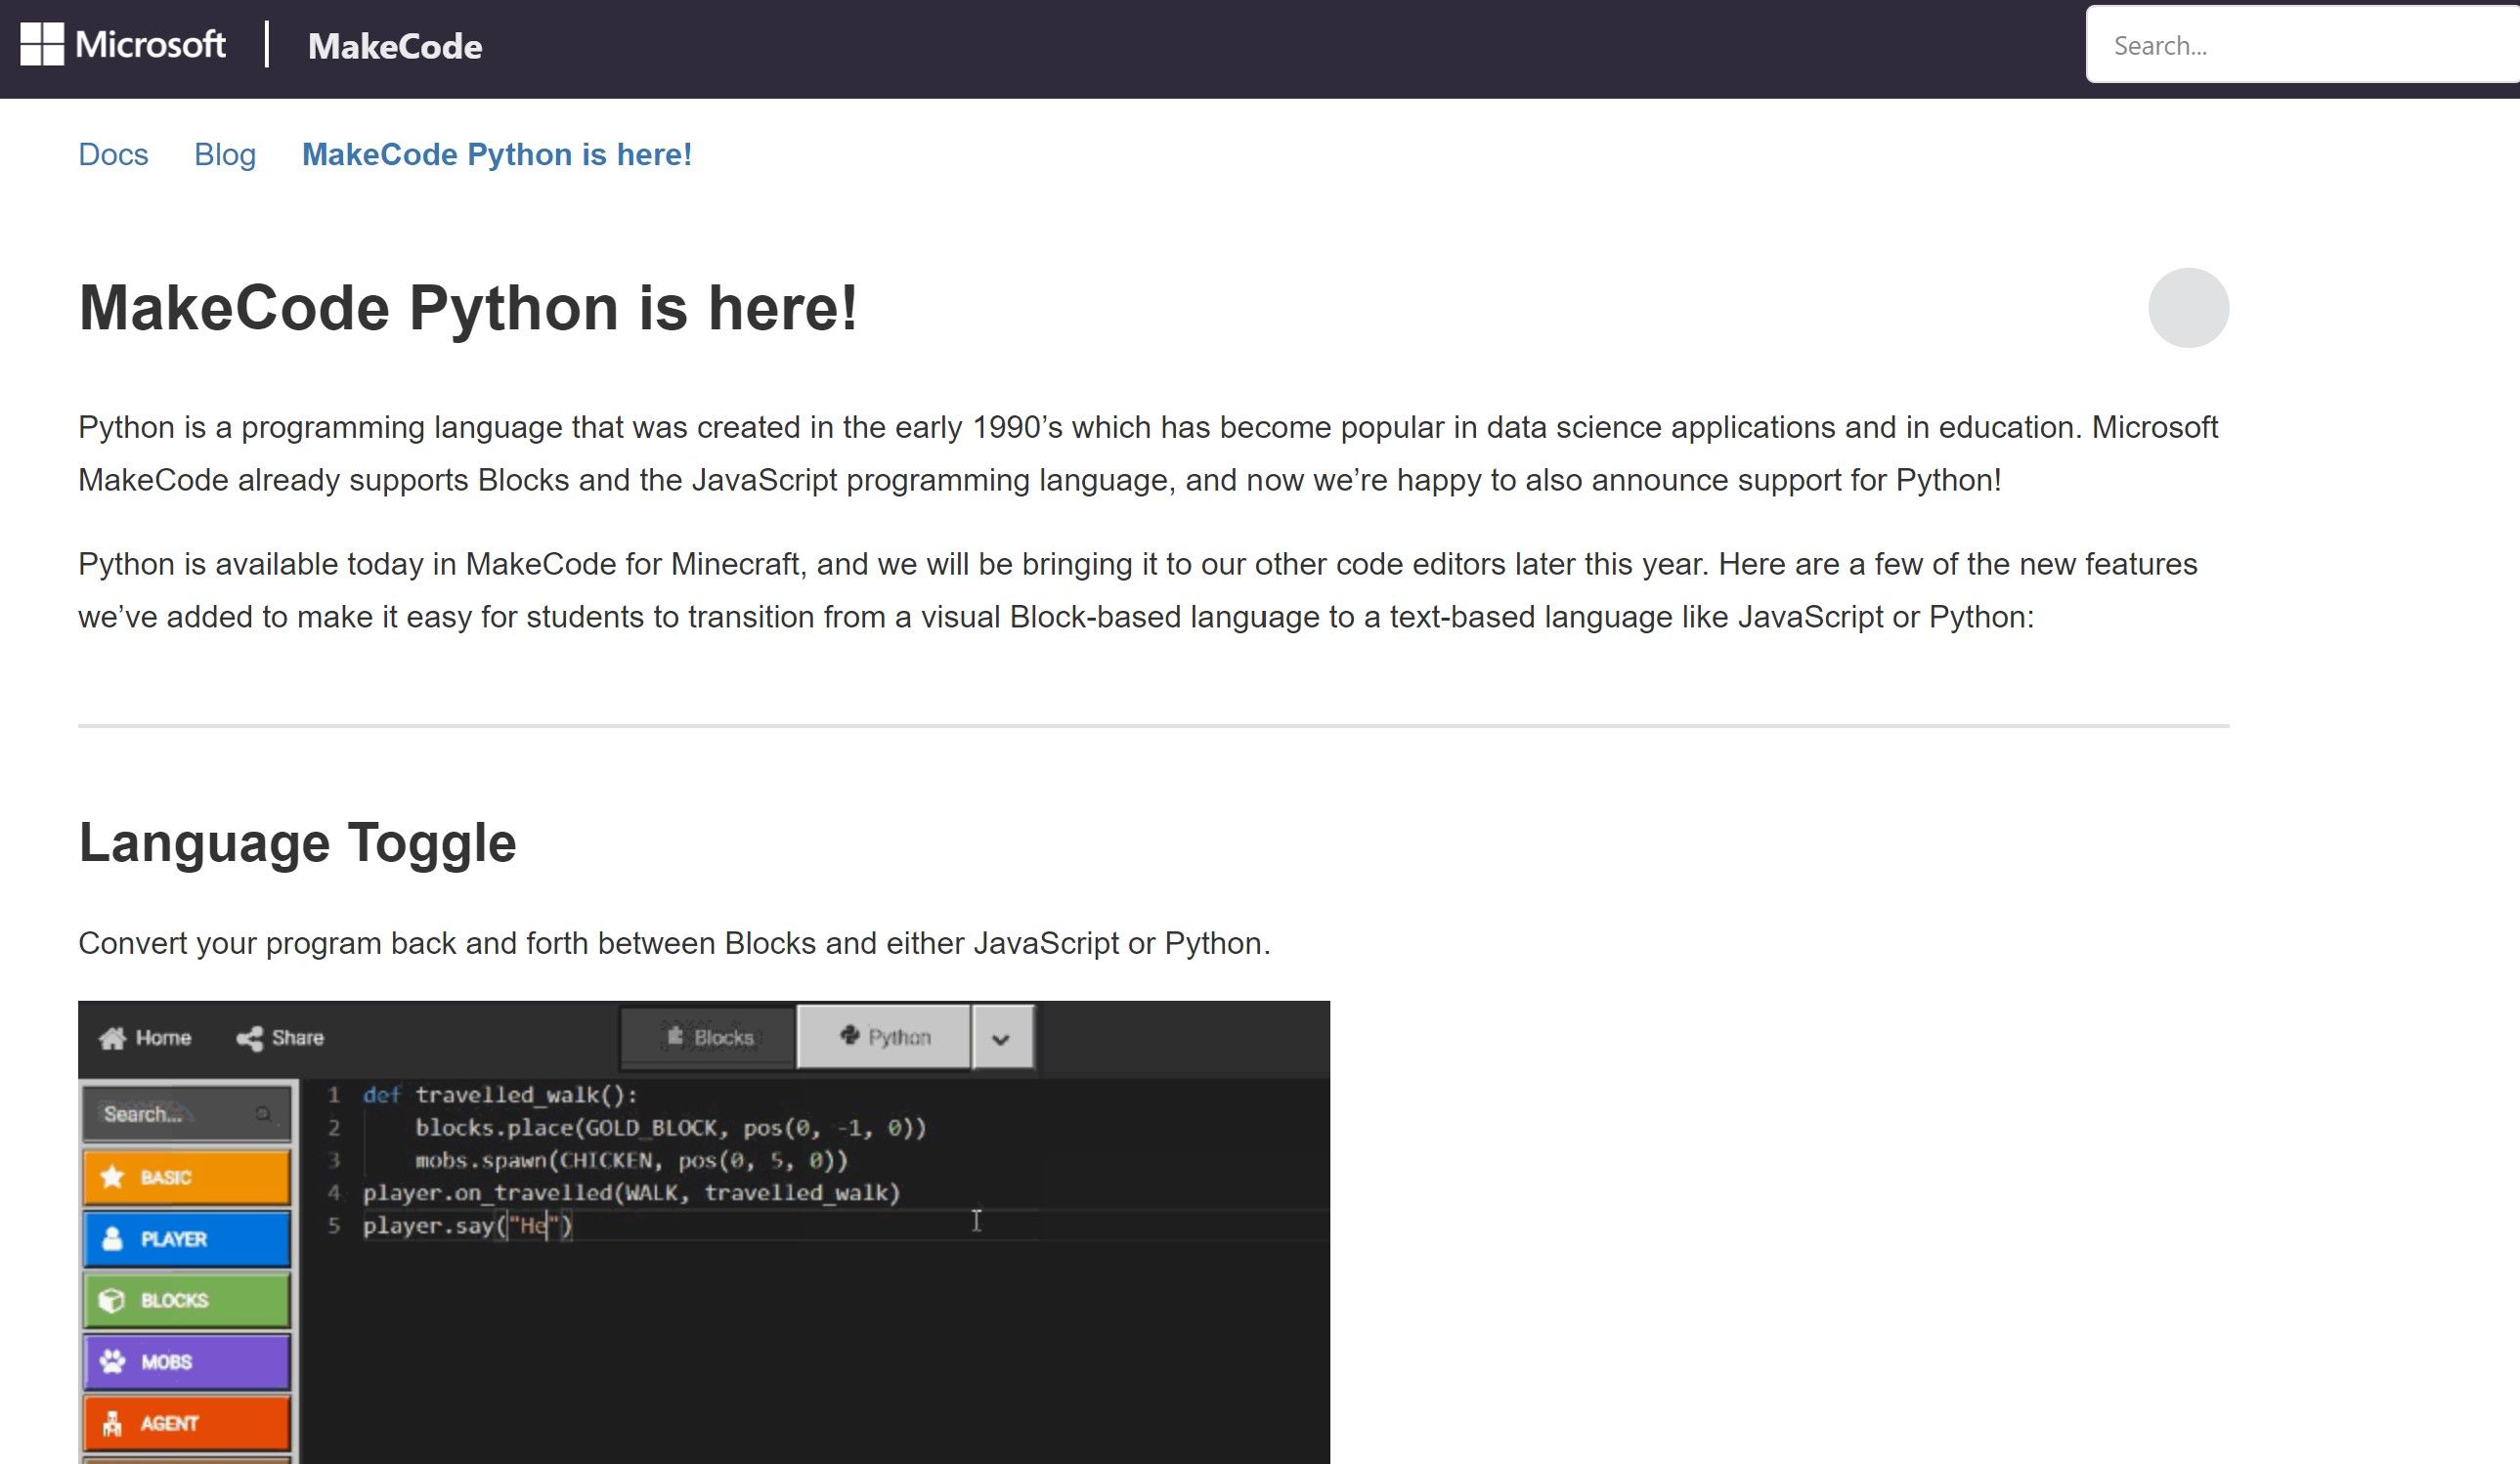 MakeCode Python website interface